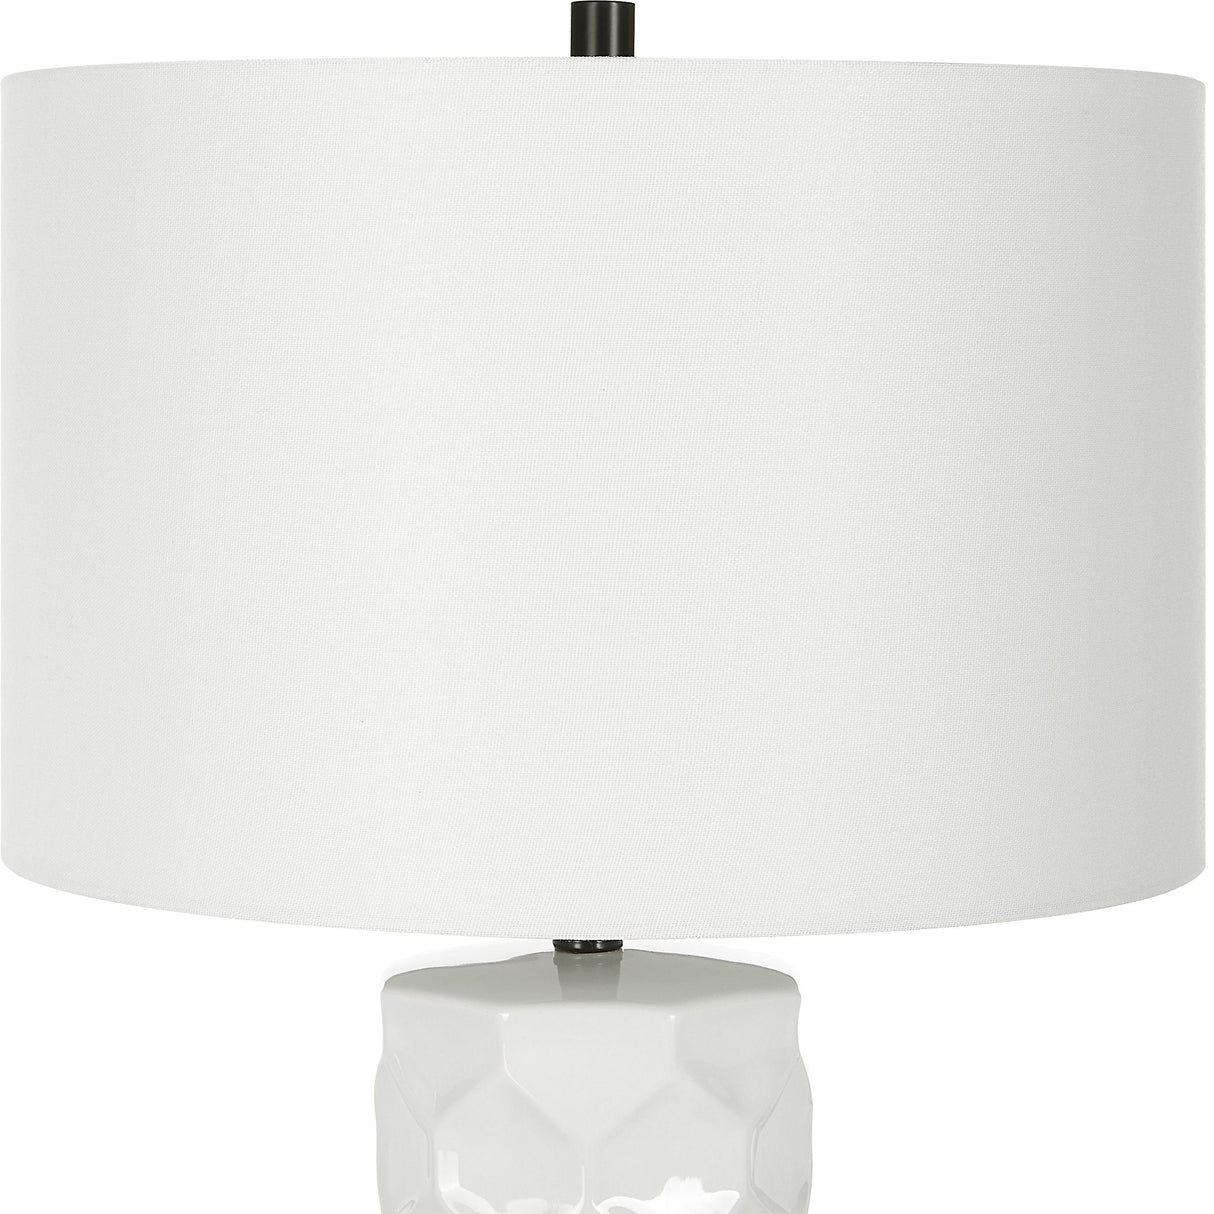 Architect - White Table Lamp